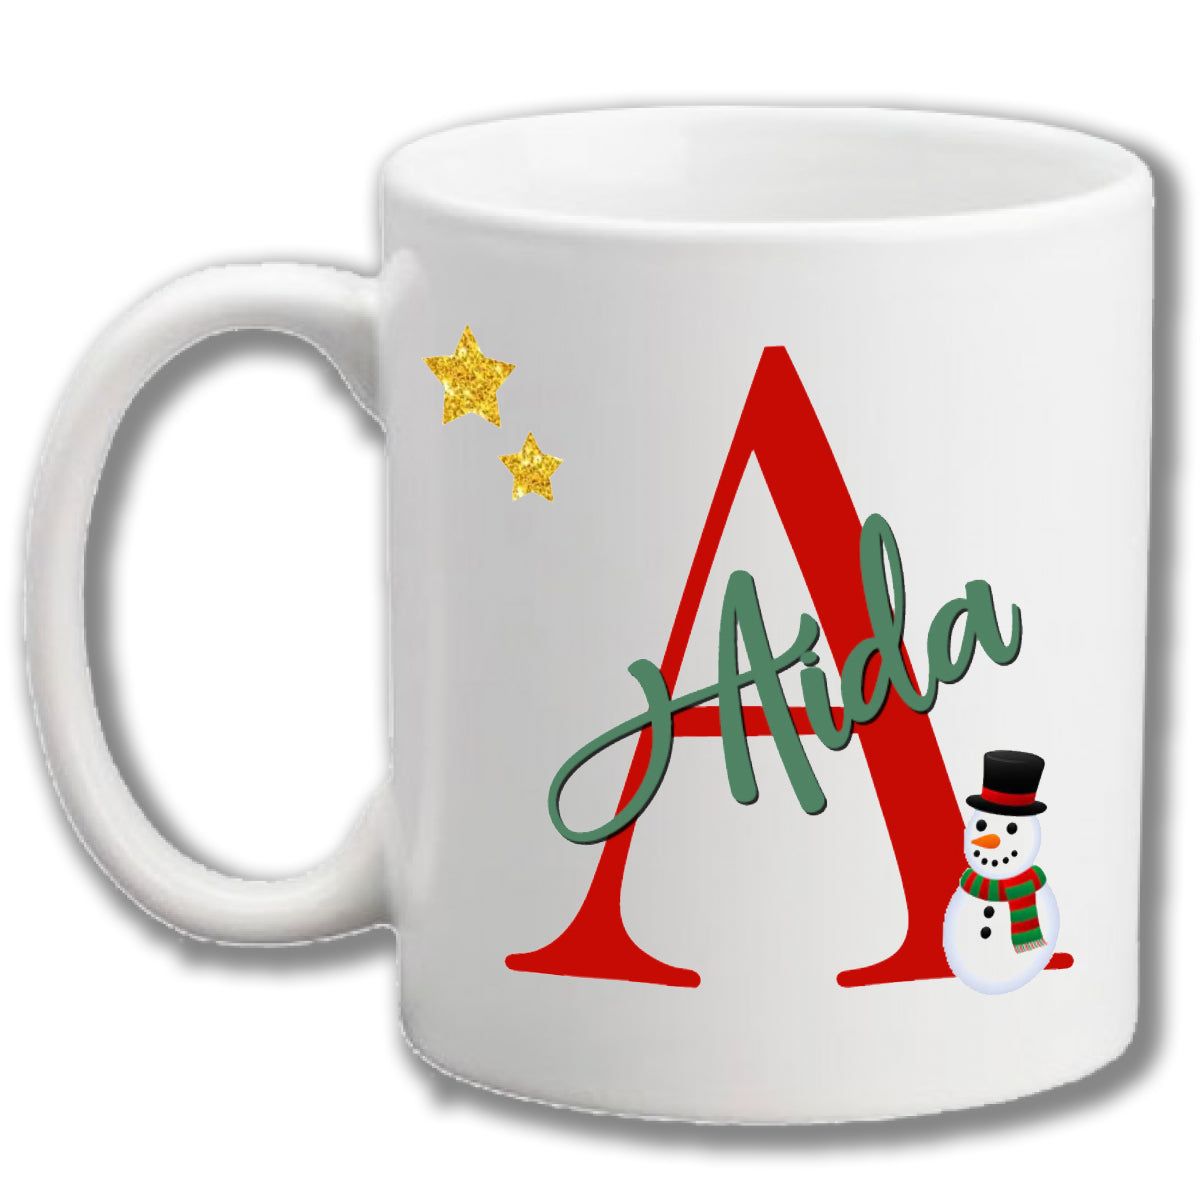 Personalized Christmas mug (Initials)